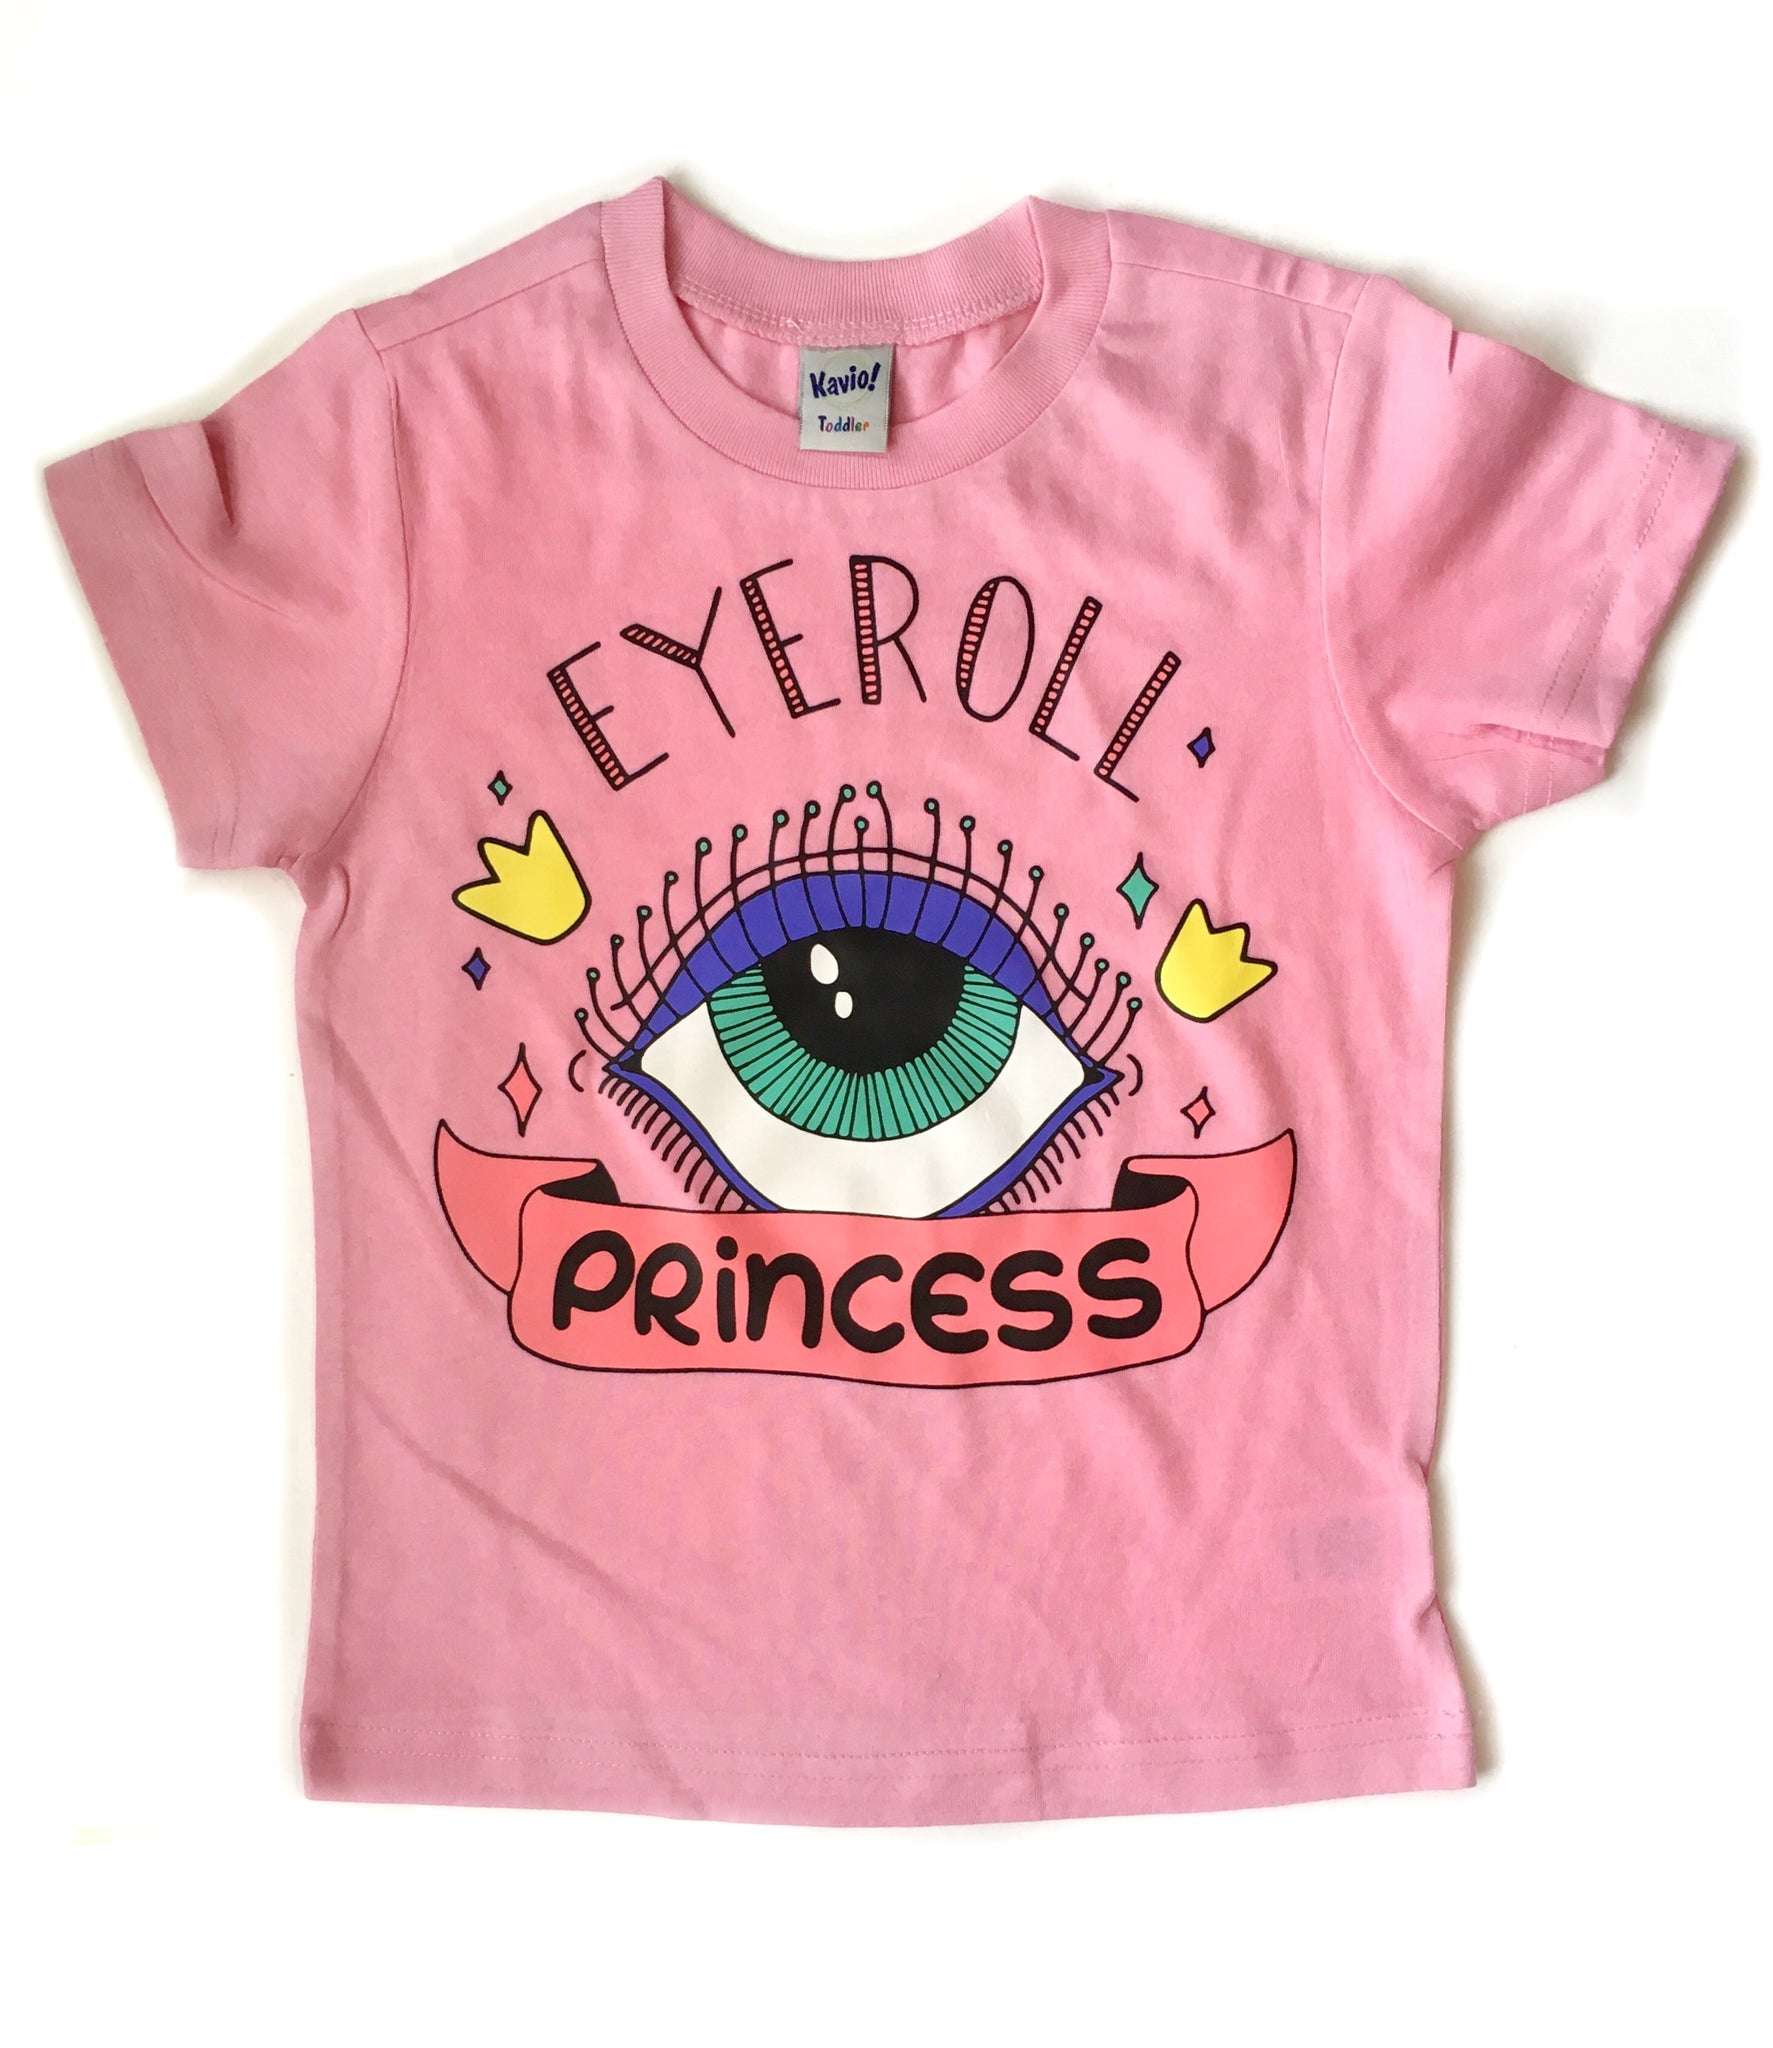 Eye roll princess tee